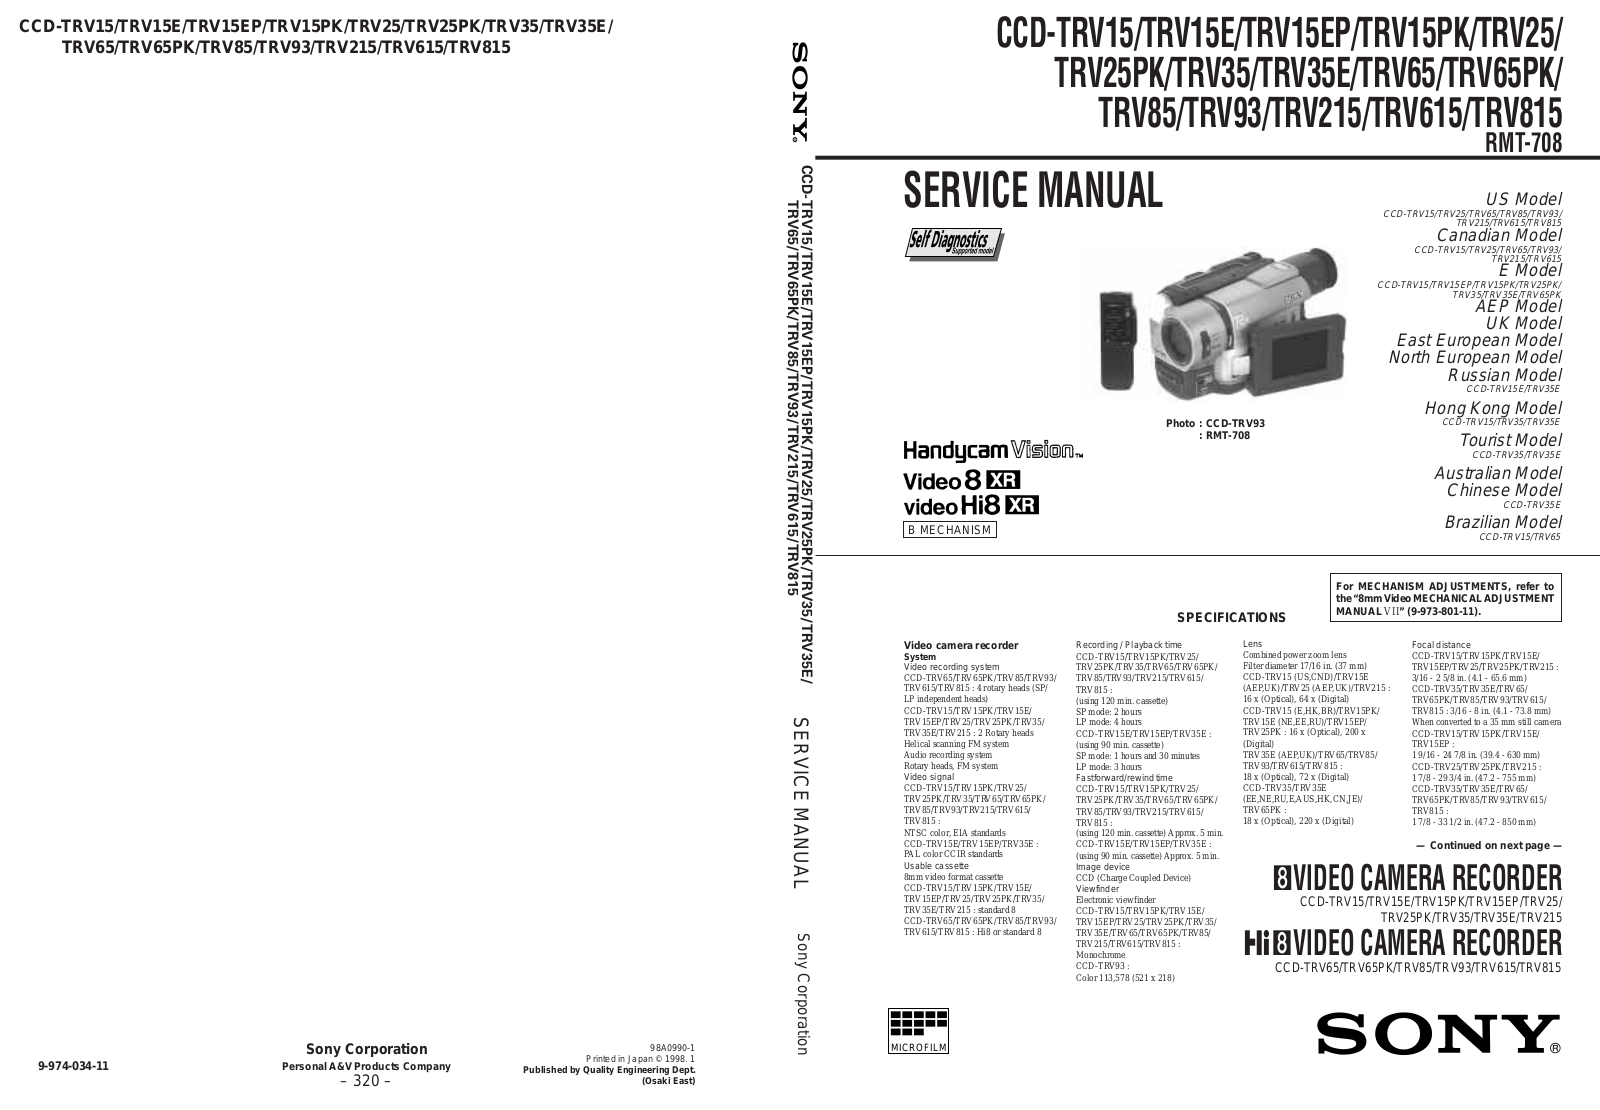 Sony CCD-TRV85, CCD-TRV815, CCD-TRV615, CCD-TRV215, CCD-TRV93 Service Manual